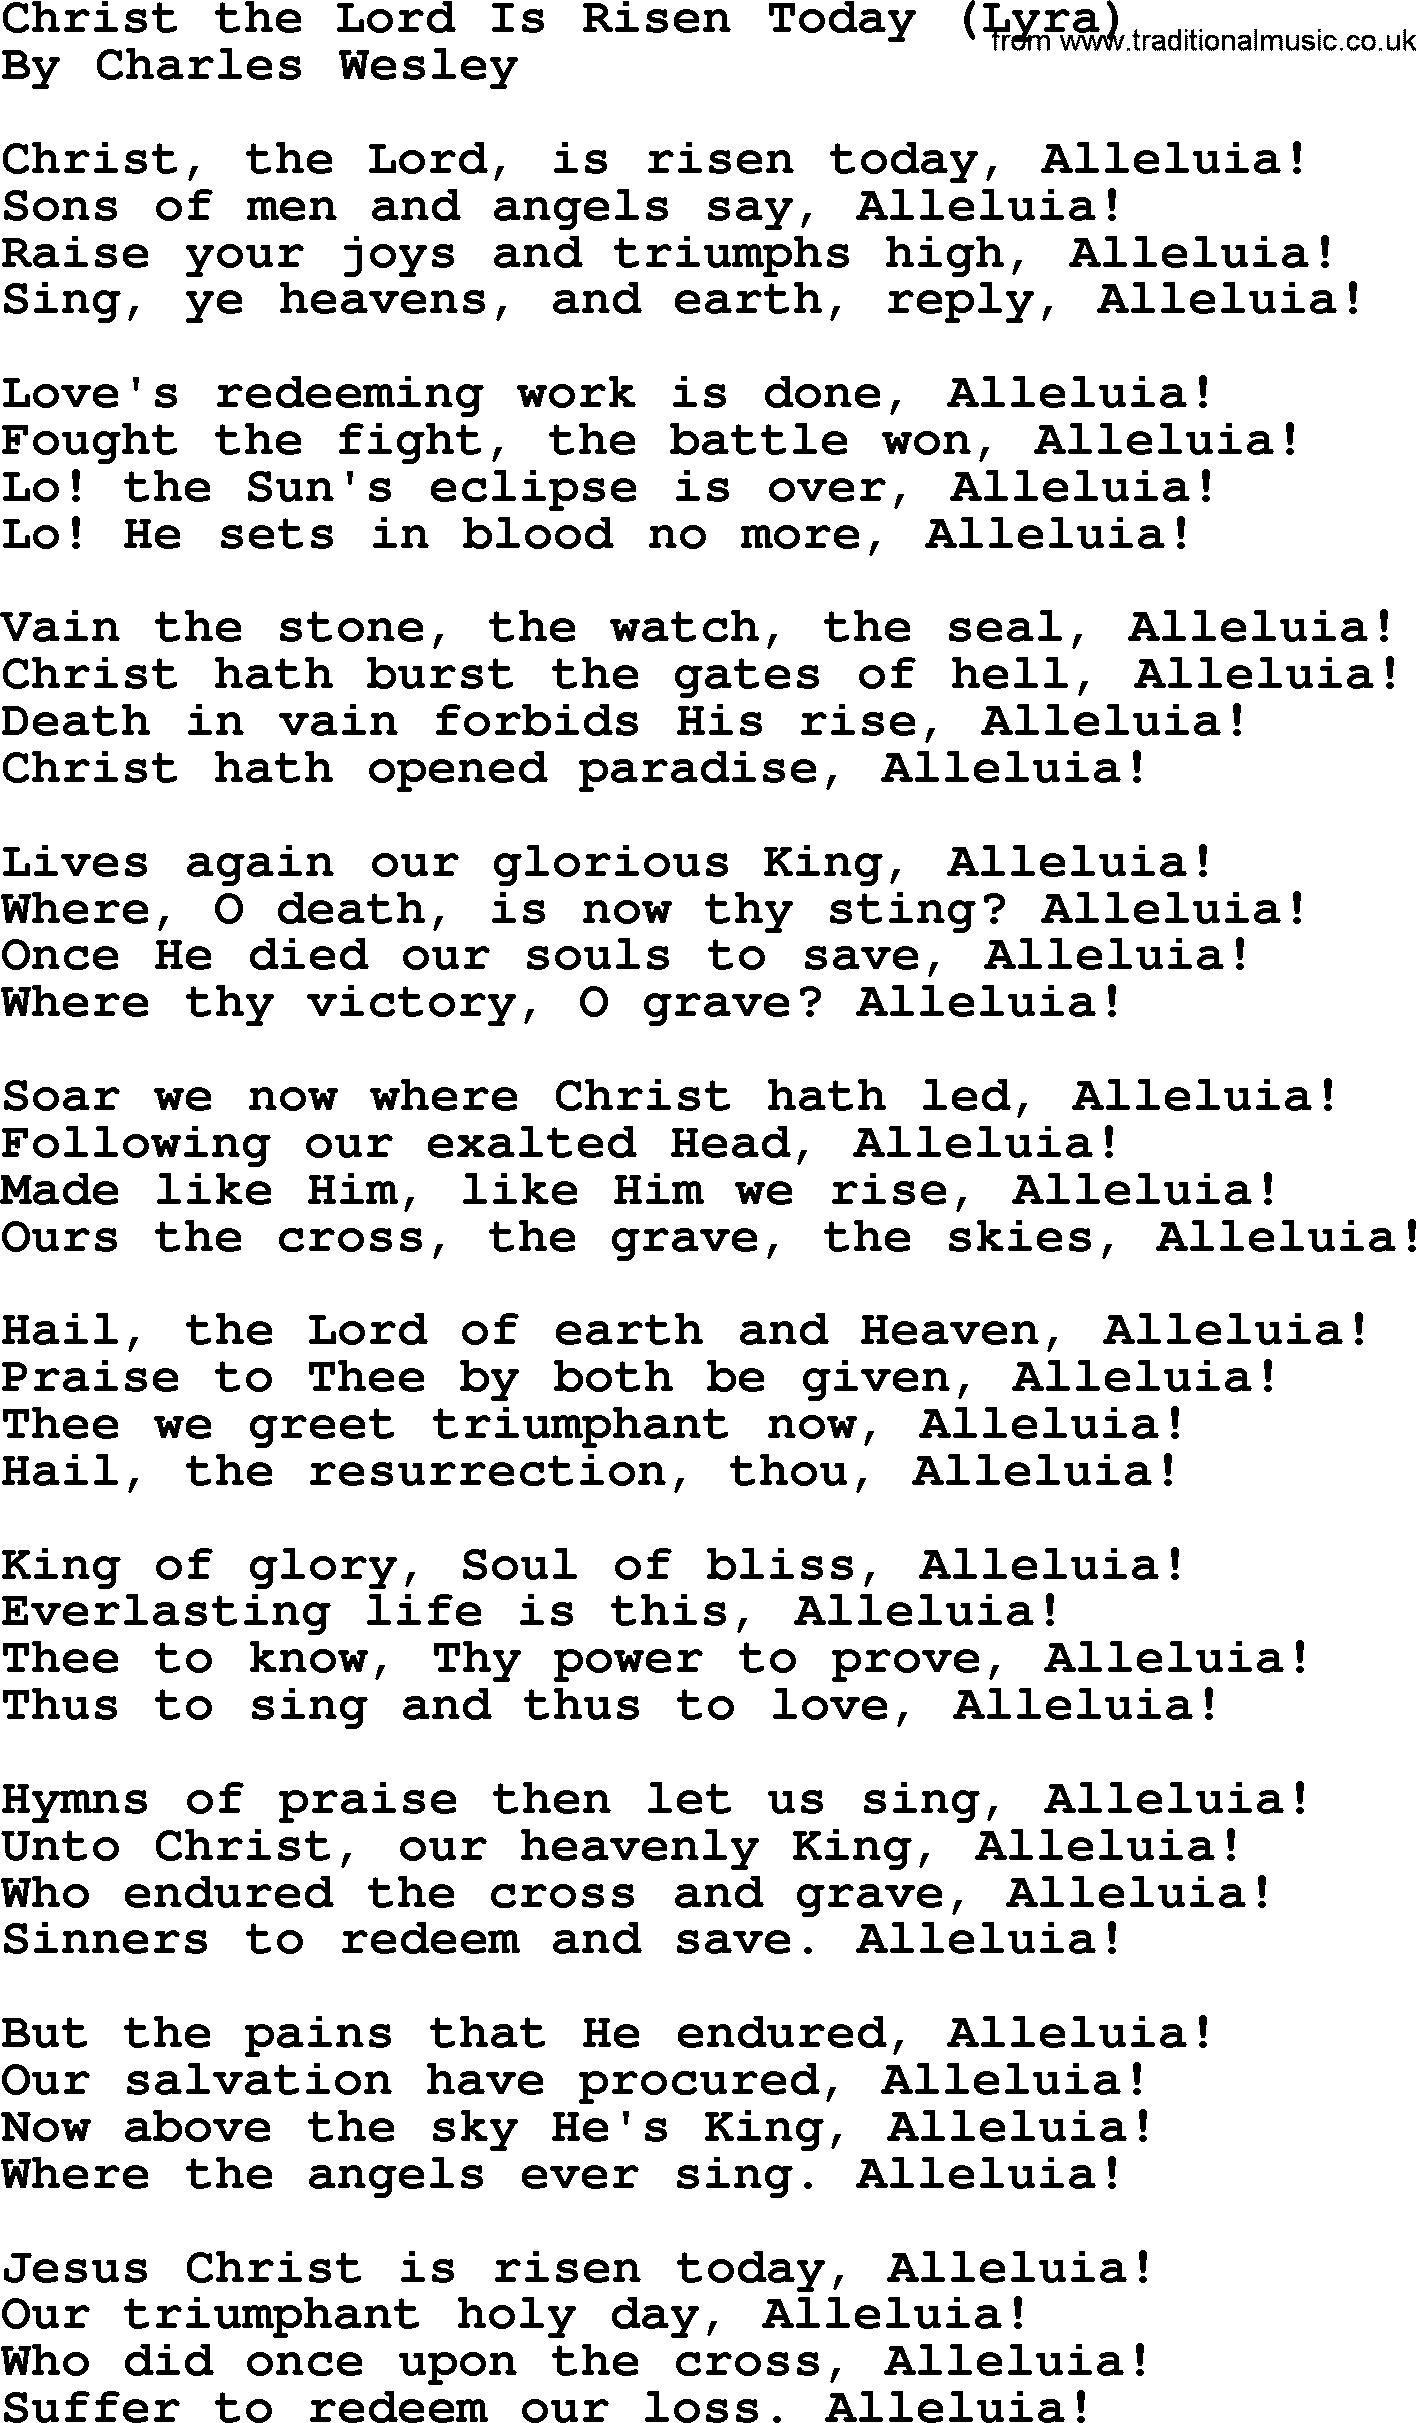 Charles Wesley hymn: Christ the Lord Is Risen Today (Lyra), lyrics